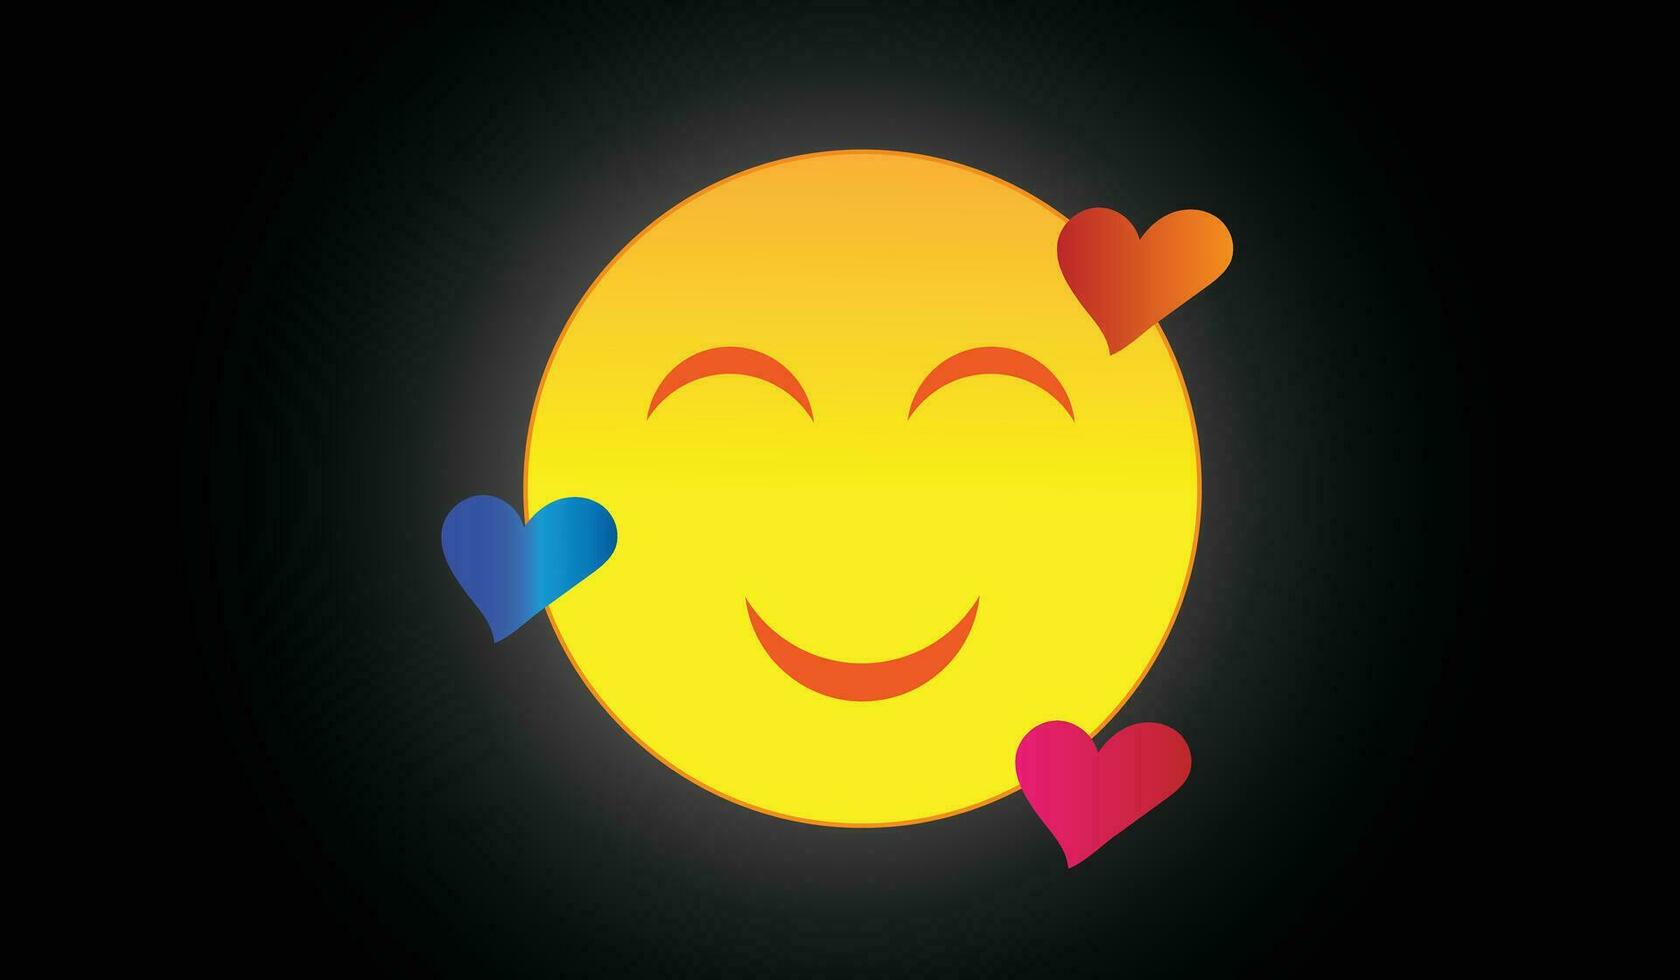 glimlach liefde emoji gezicht vlak ontwerp reactie vector ontwerp illustratie